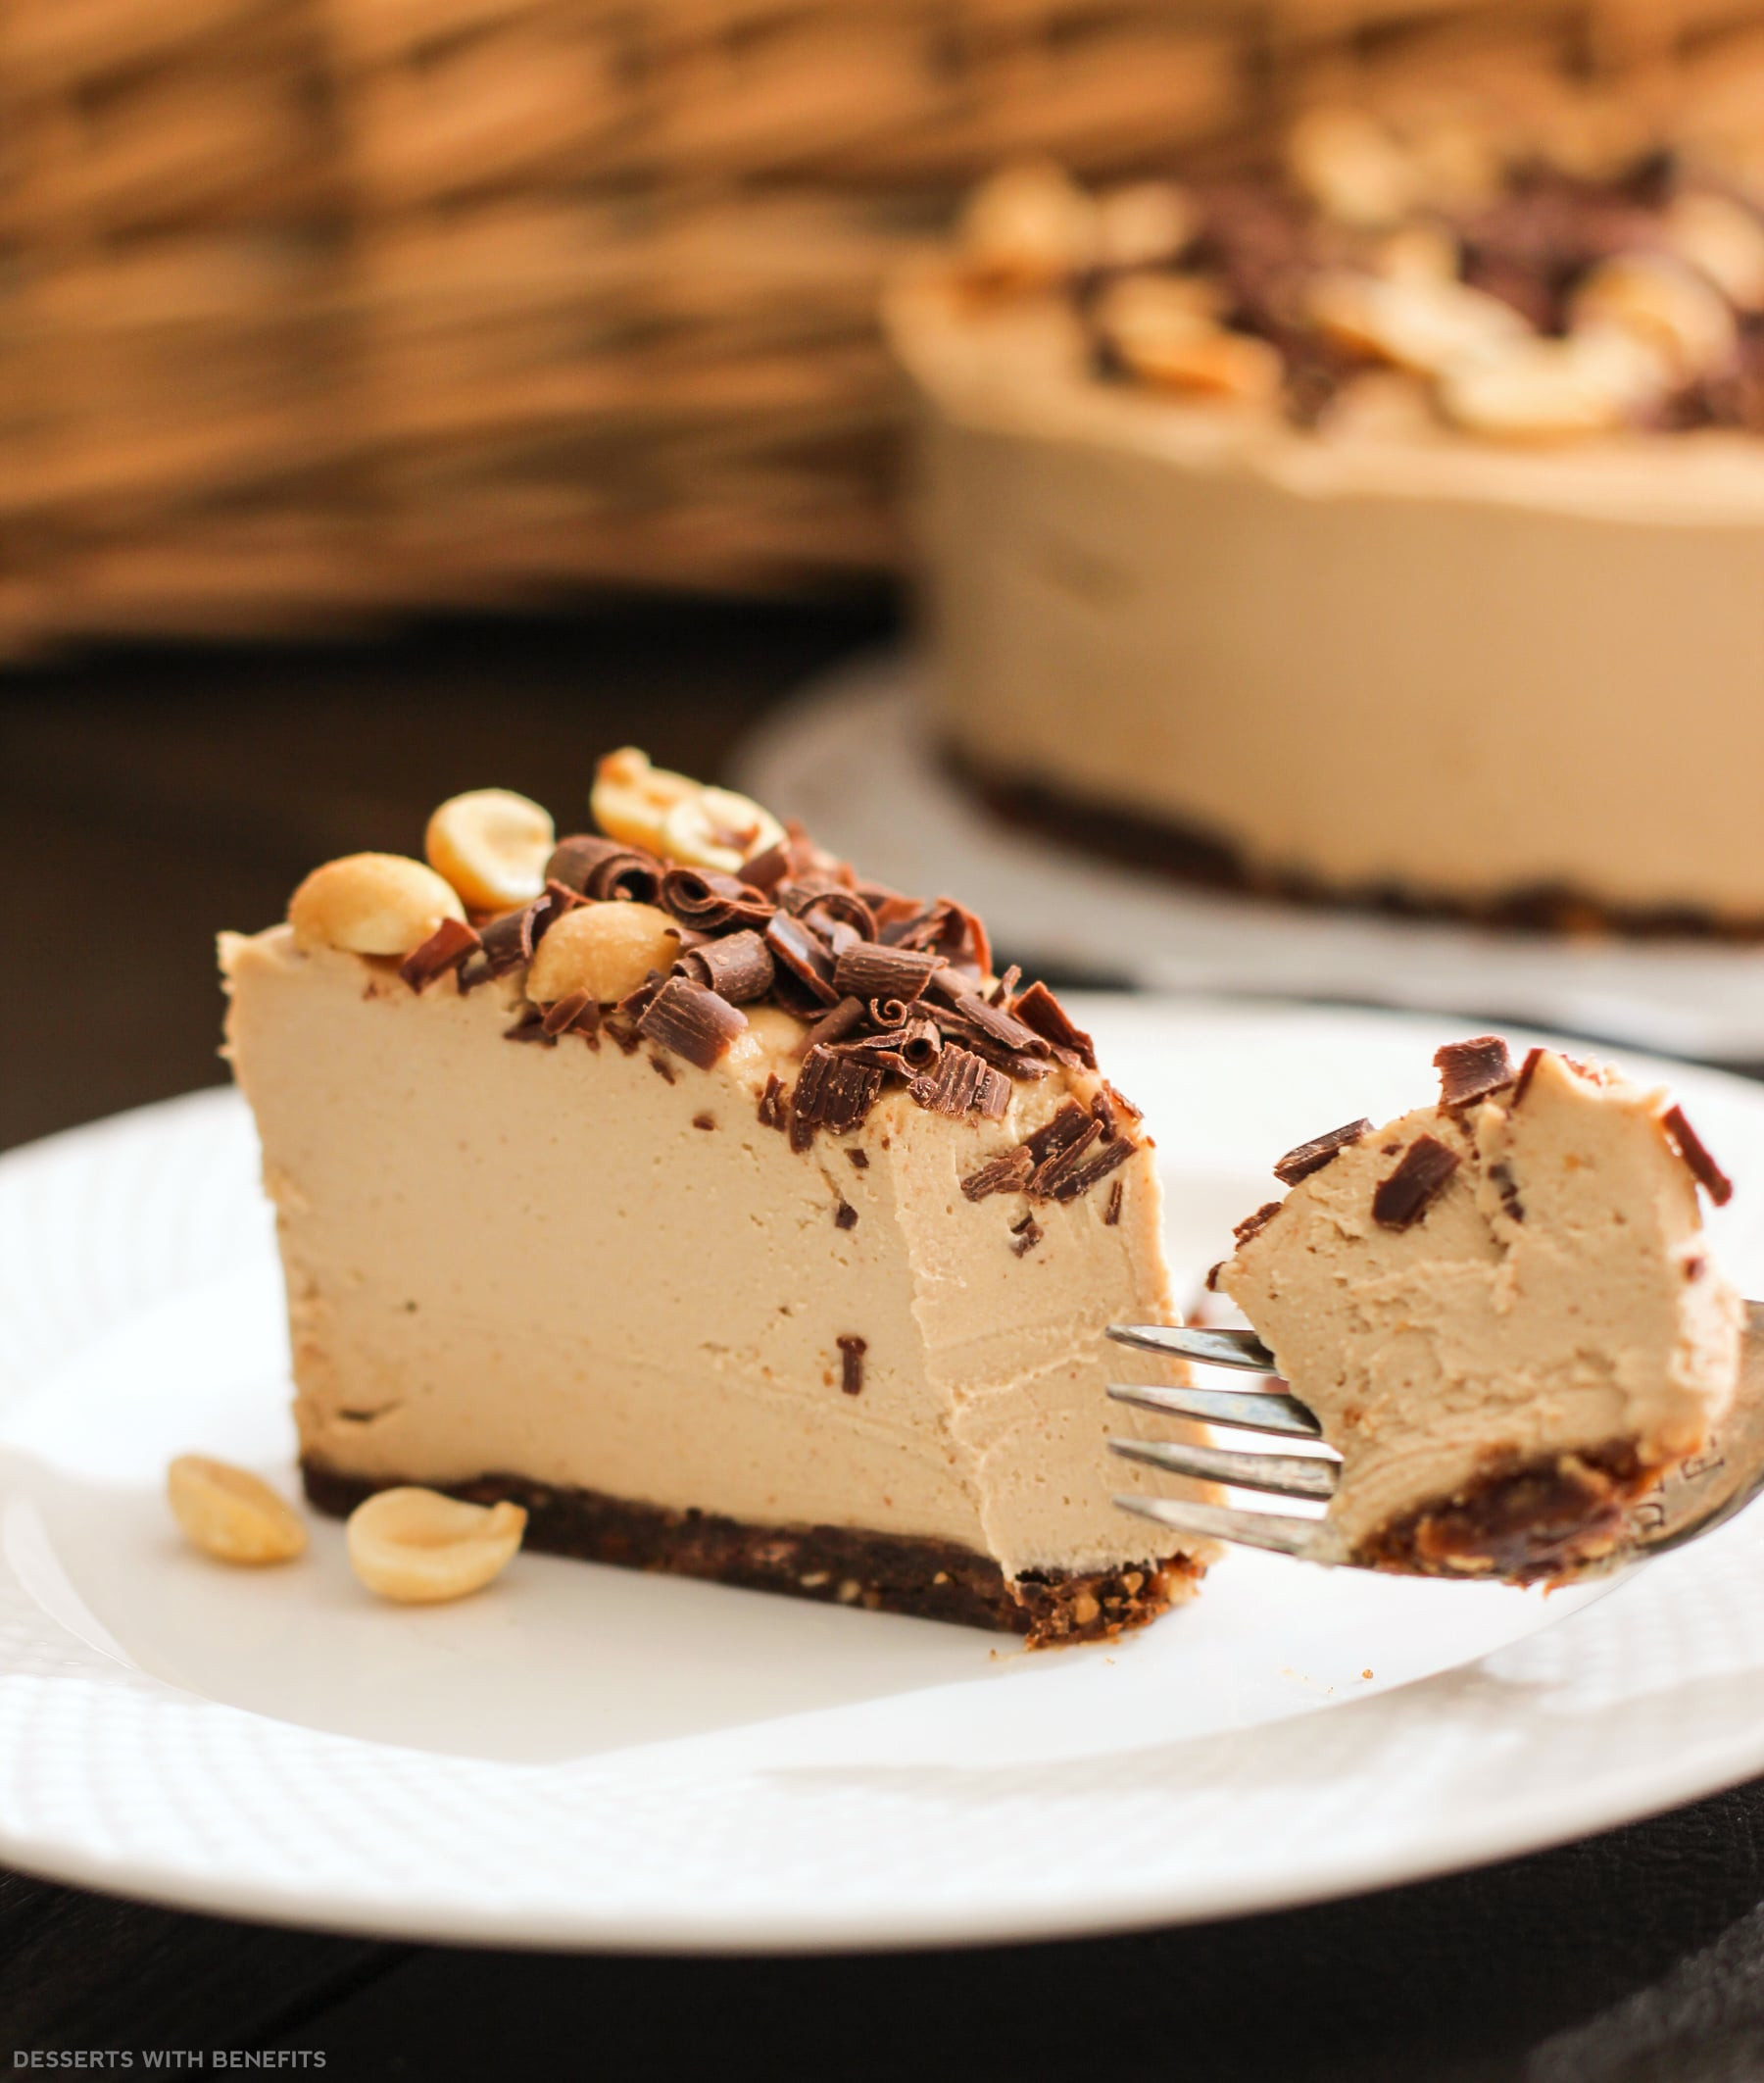 Sugar Free Dairy Free Desserts
 Desserts With Benefits Healthy Chocolate Peanut Butter Raw